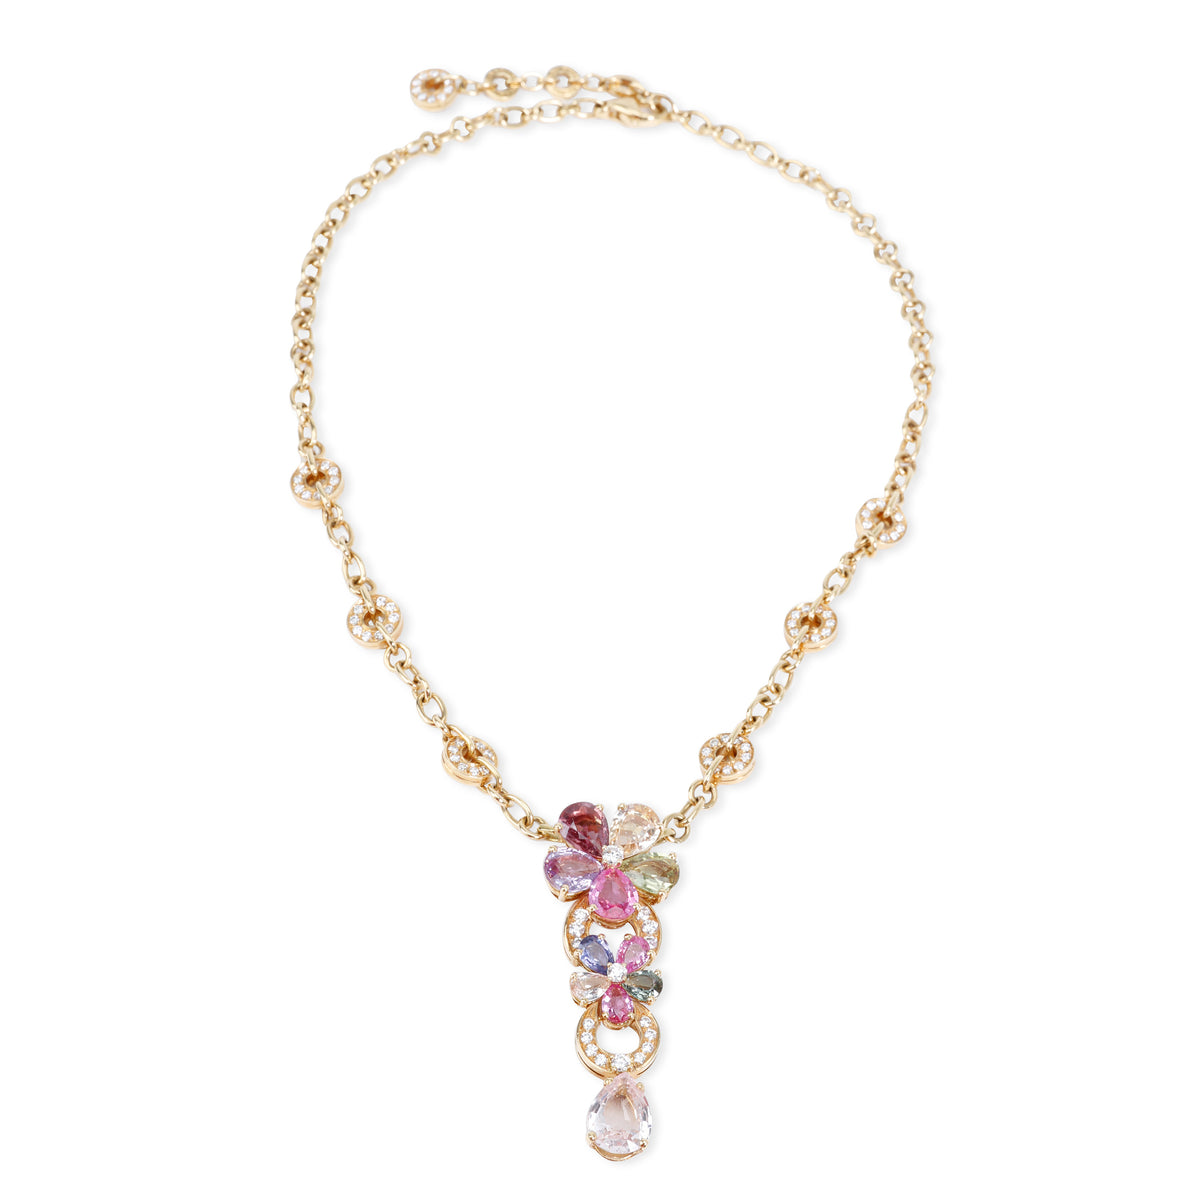 Bulgari Flora Sapphire & Diamond Necklace in 18KT Gold 2.24 CTW